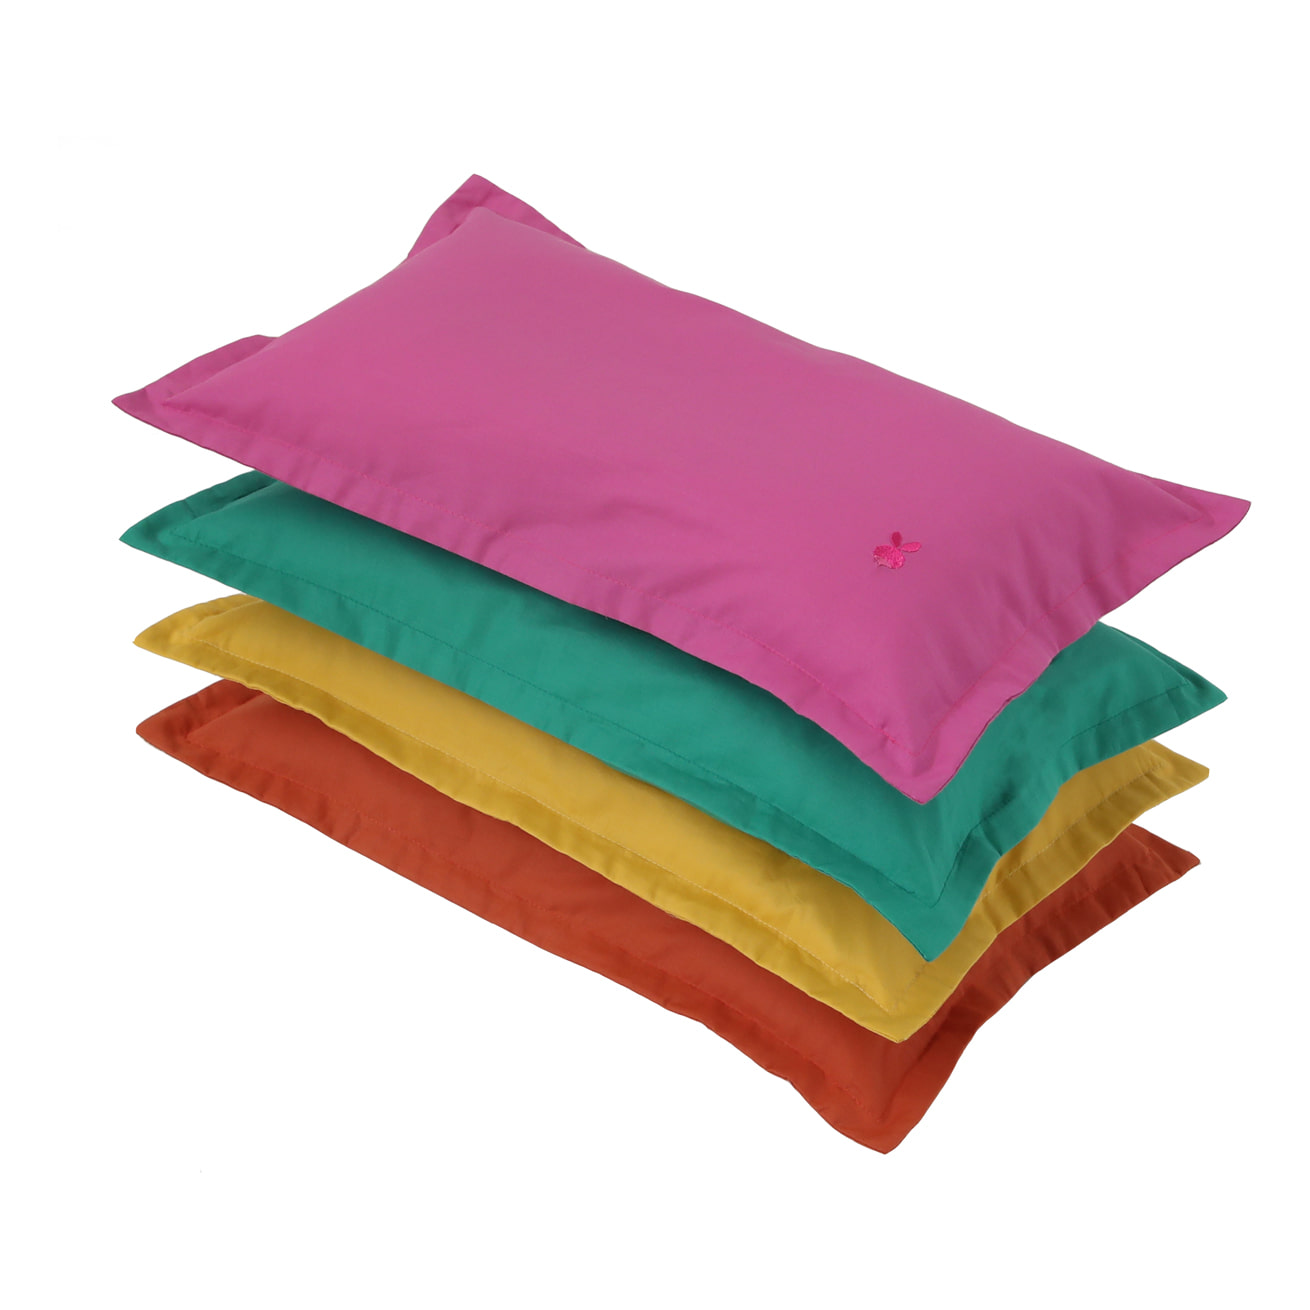 Arco Pillow Cover 아르코 베개커버(핑크/그린/옐로/브라운)